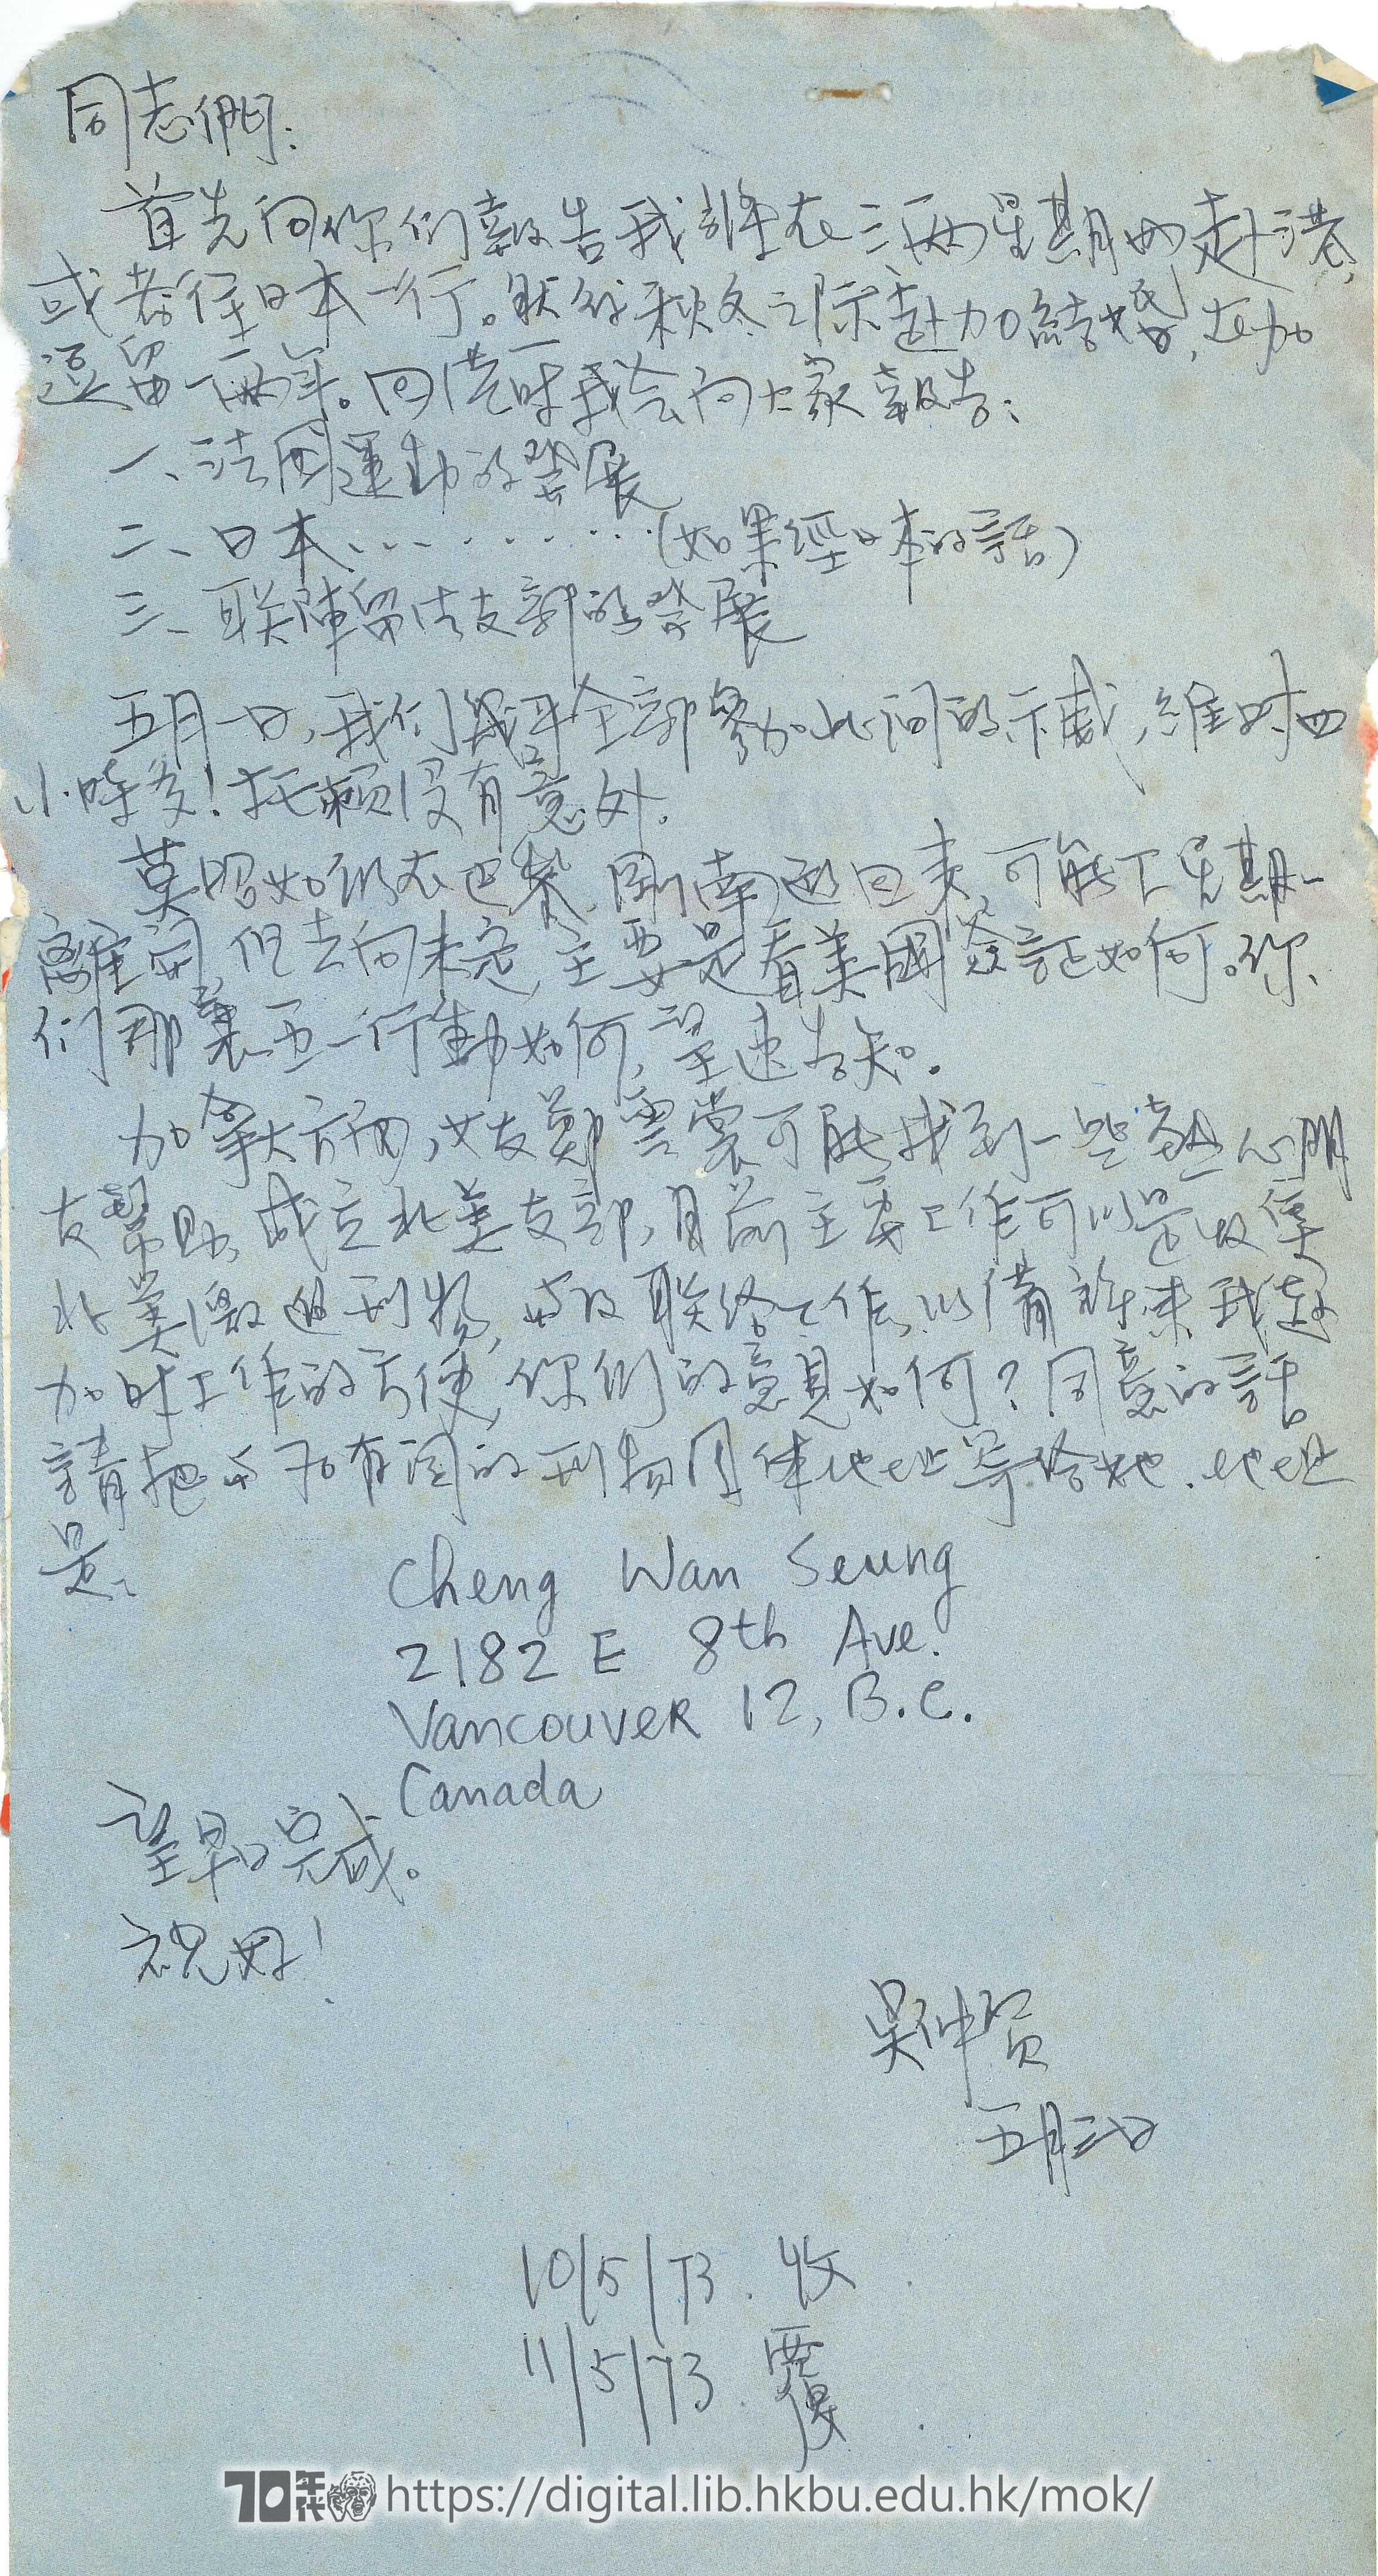   Letter from Ng Chung Yin to friends NG, Chung Yin 